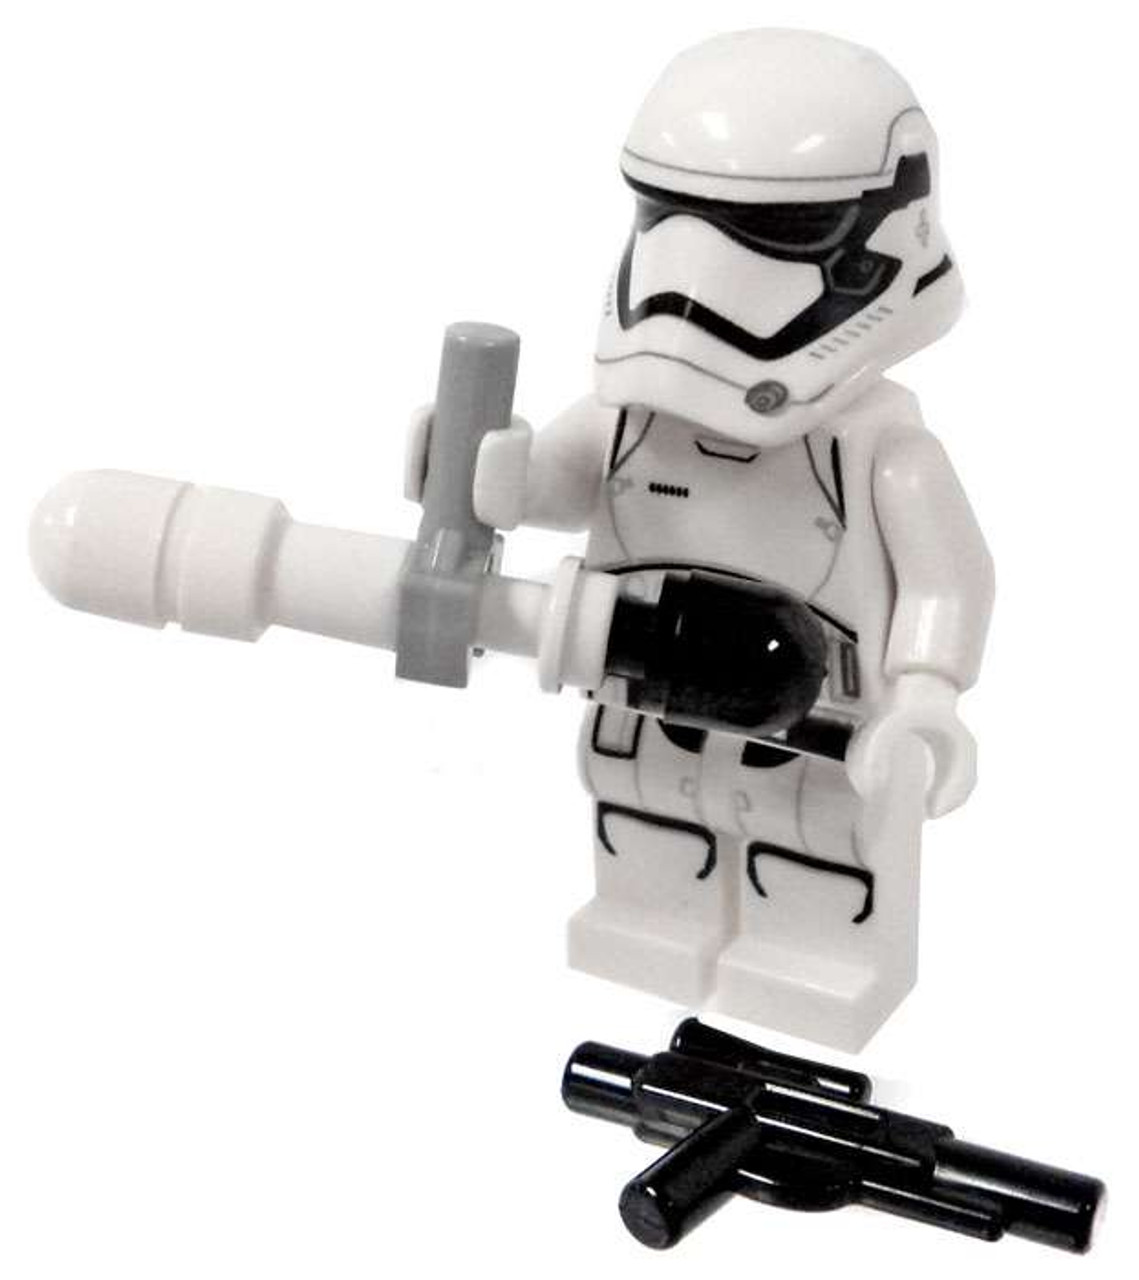 lego star wars stormtrooper minifigure